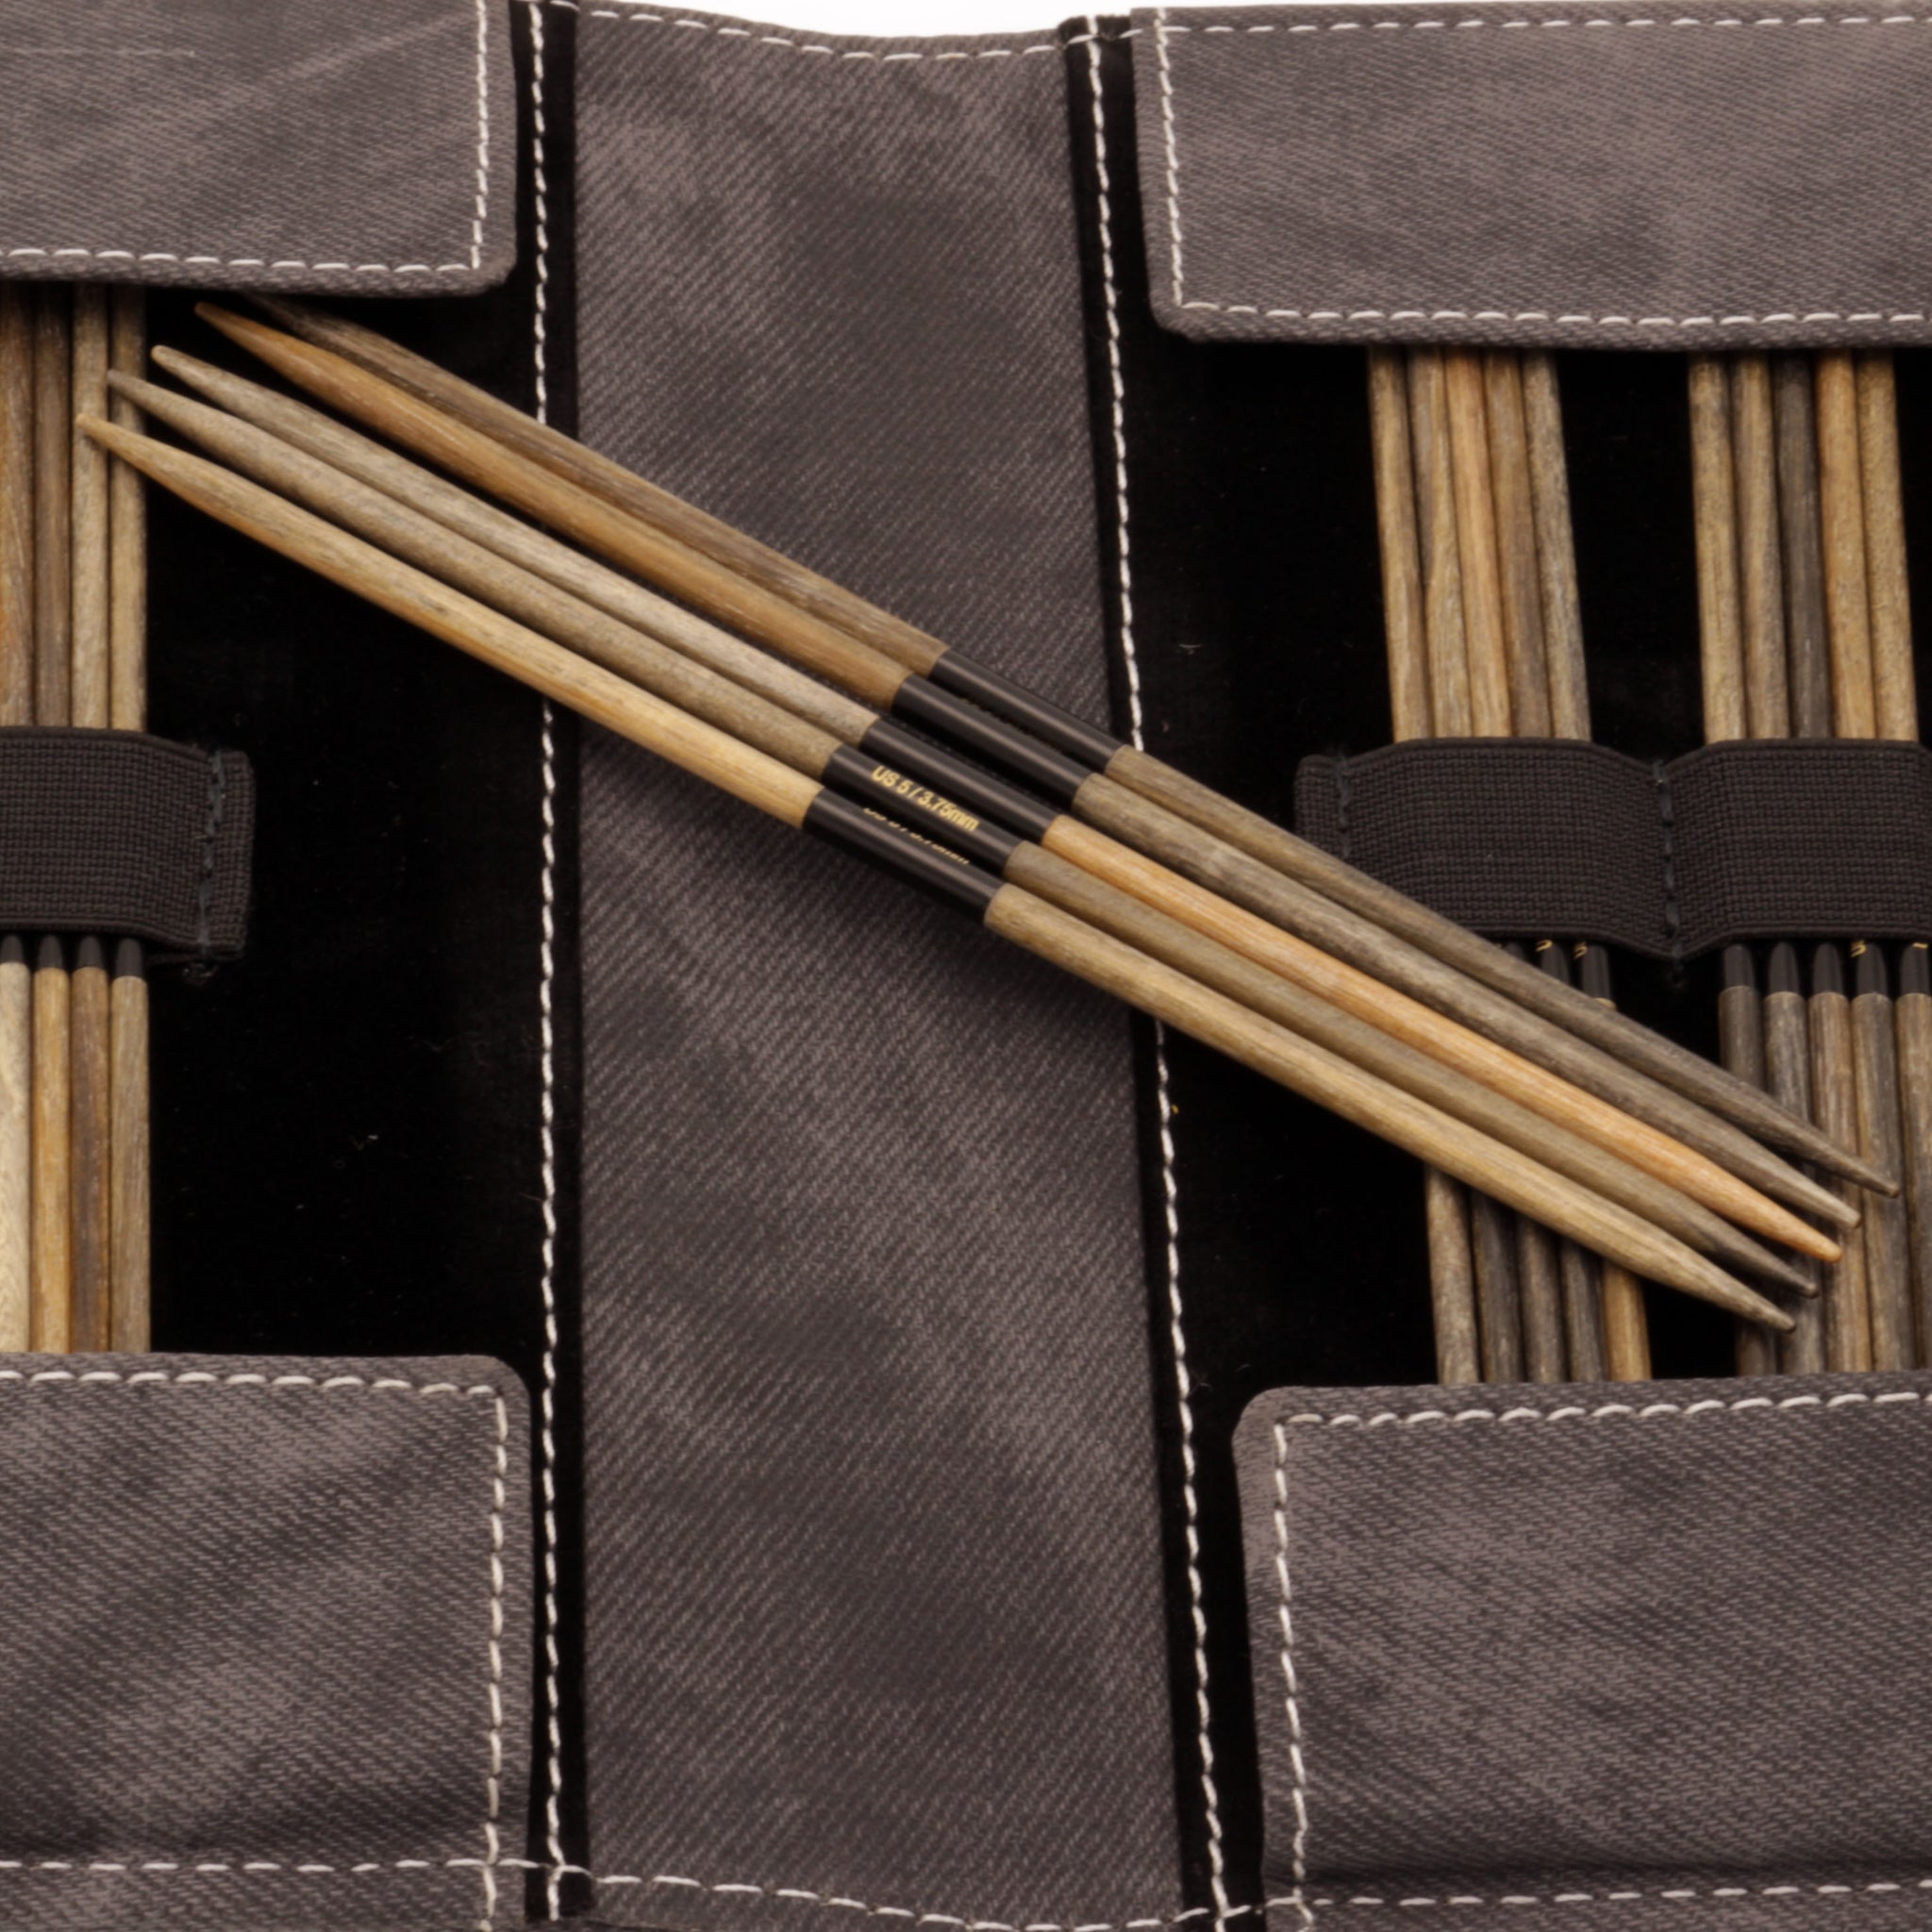 Prym 8 Double Point Bamboo Knitting Needles, 5.5mm